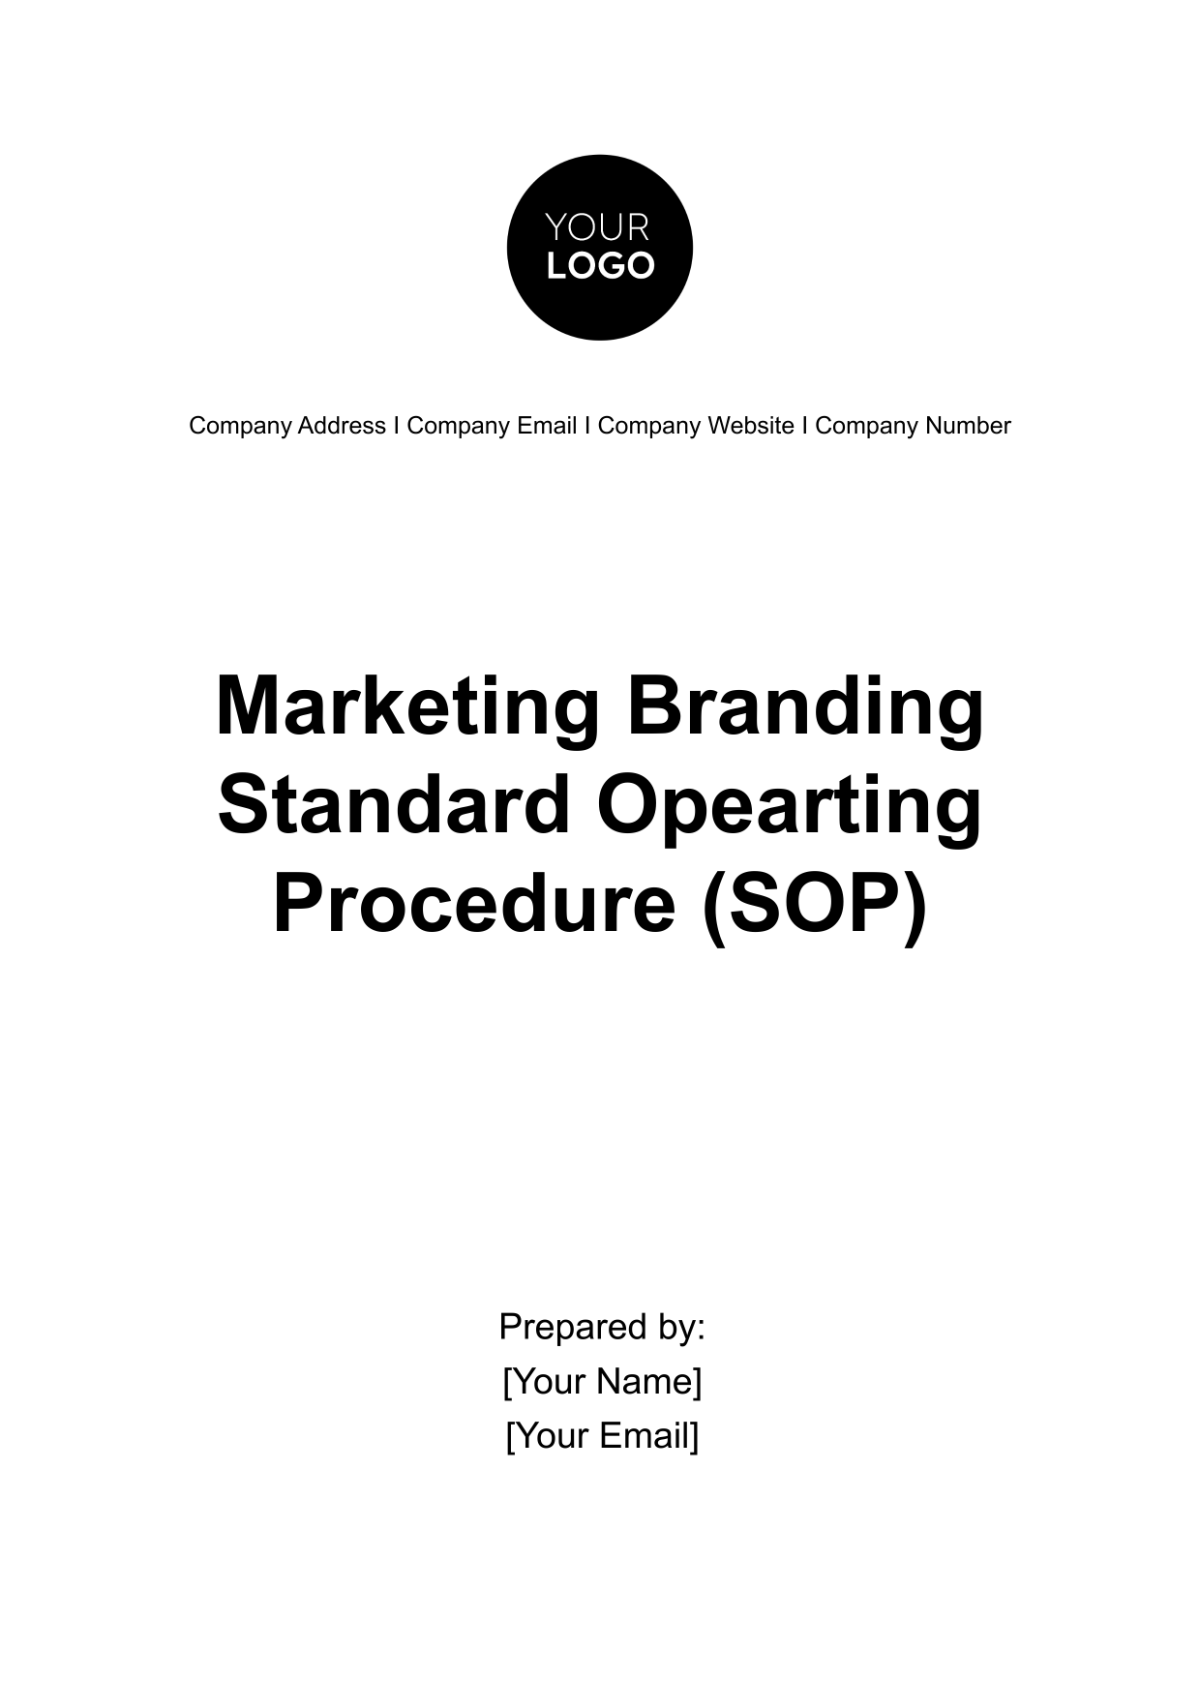 Marketing Branding Standard Operating Procedure (SOP) Template